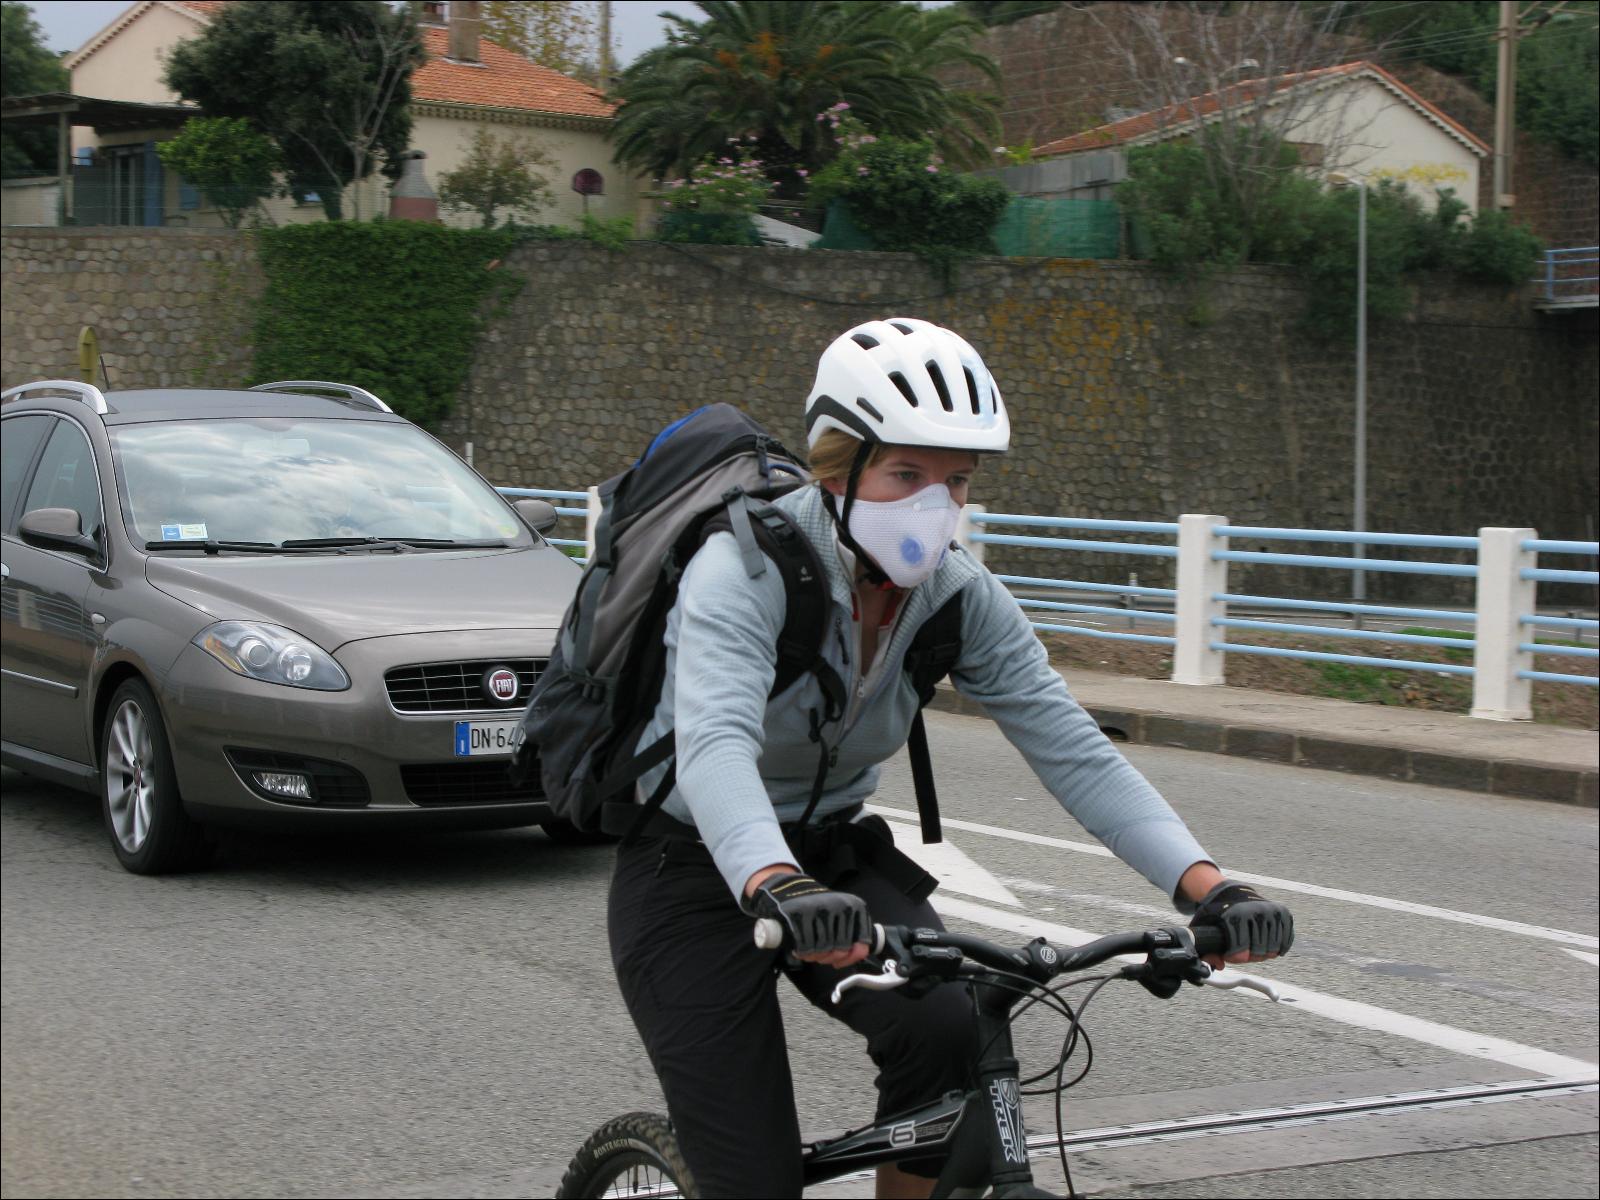 Masques Anti-Pollution